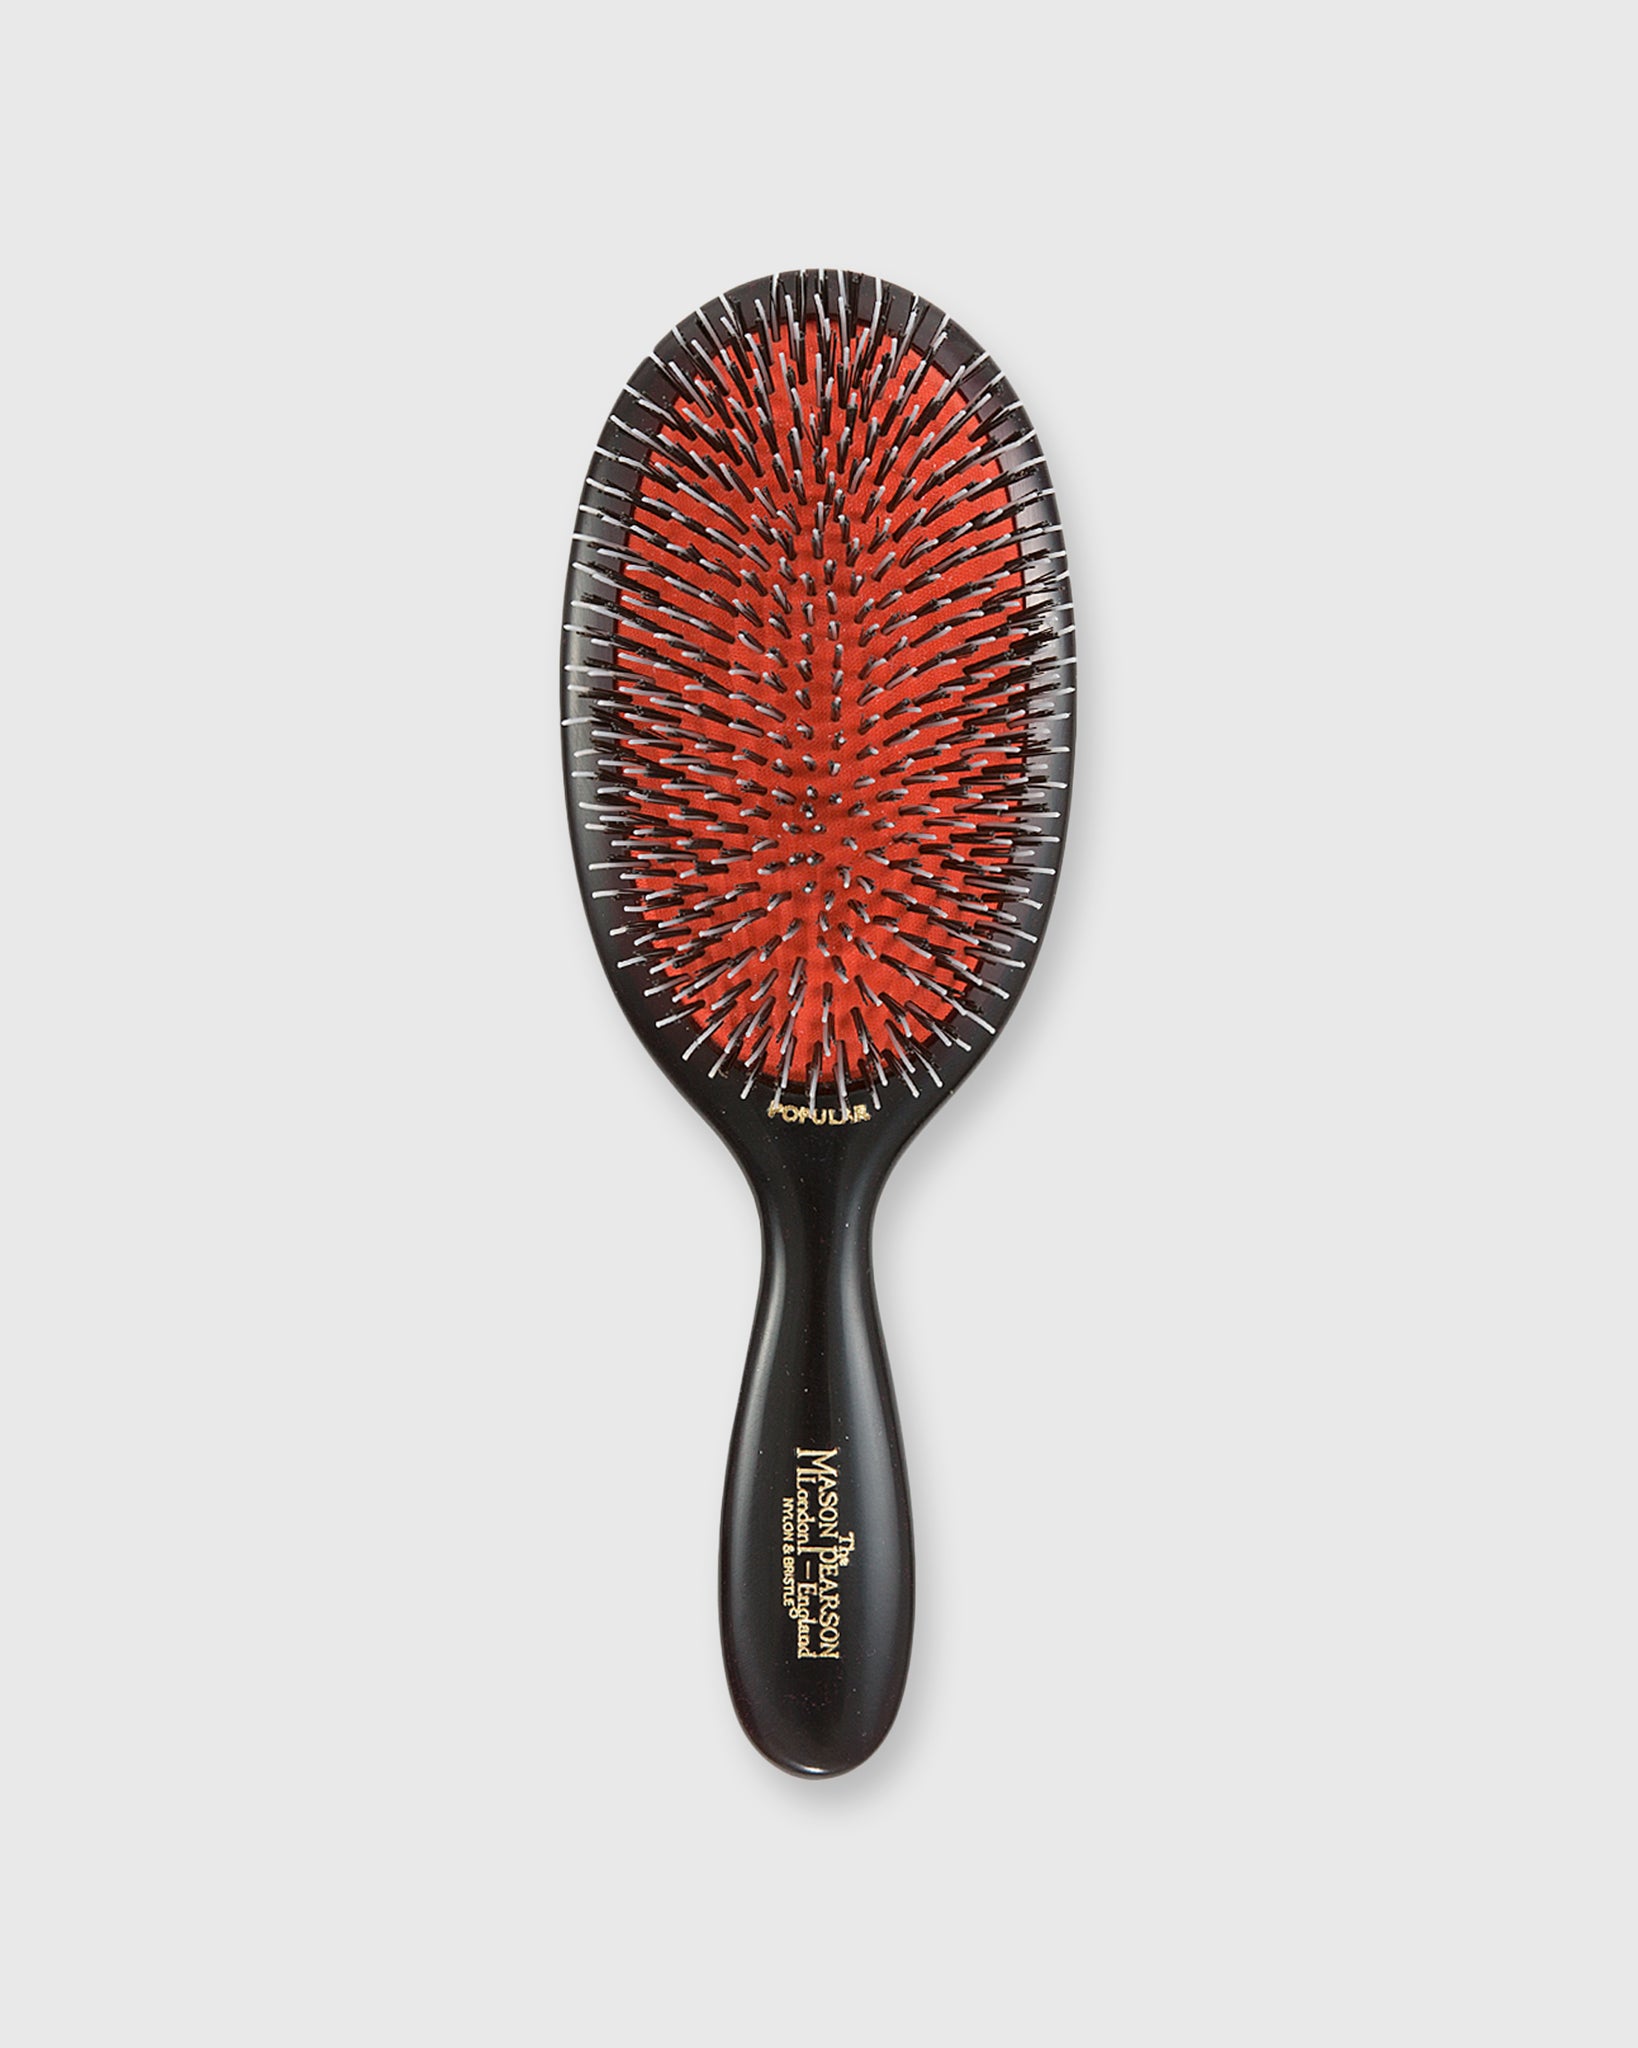 Popular Mixed-Bristle Hairbrush